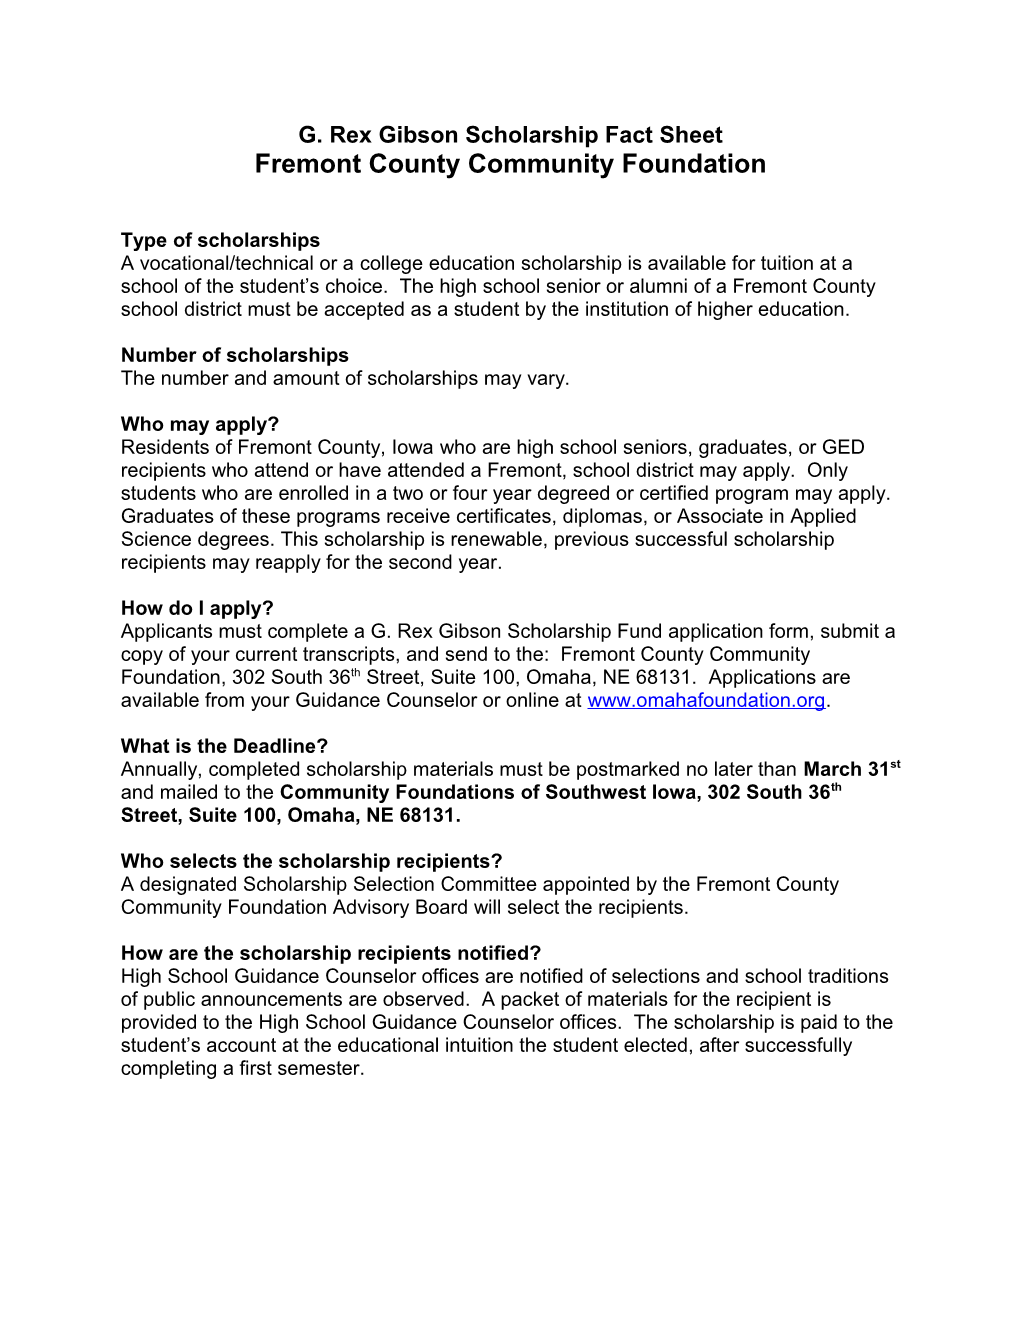 Harrison County Endowment Fund s2